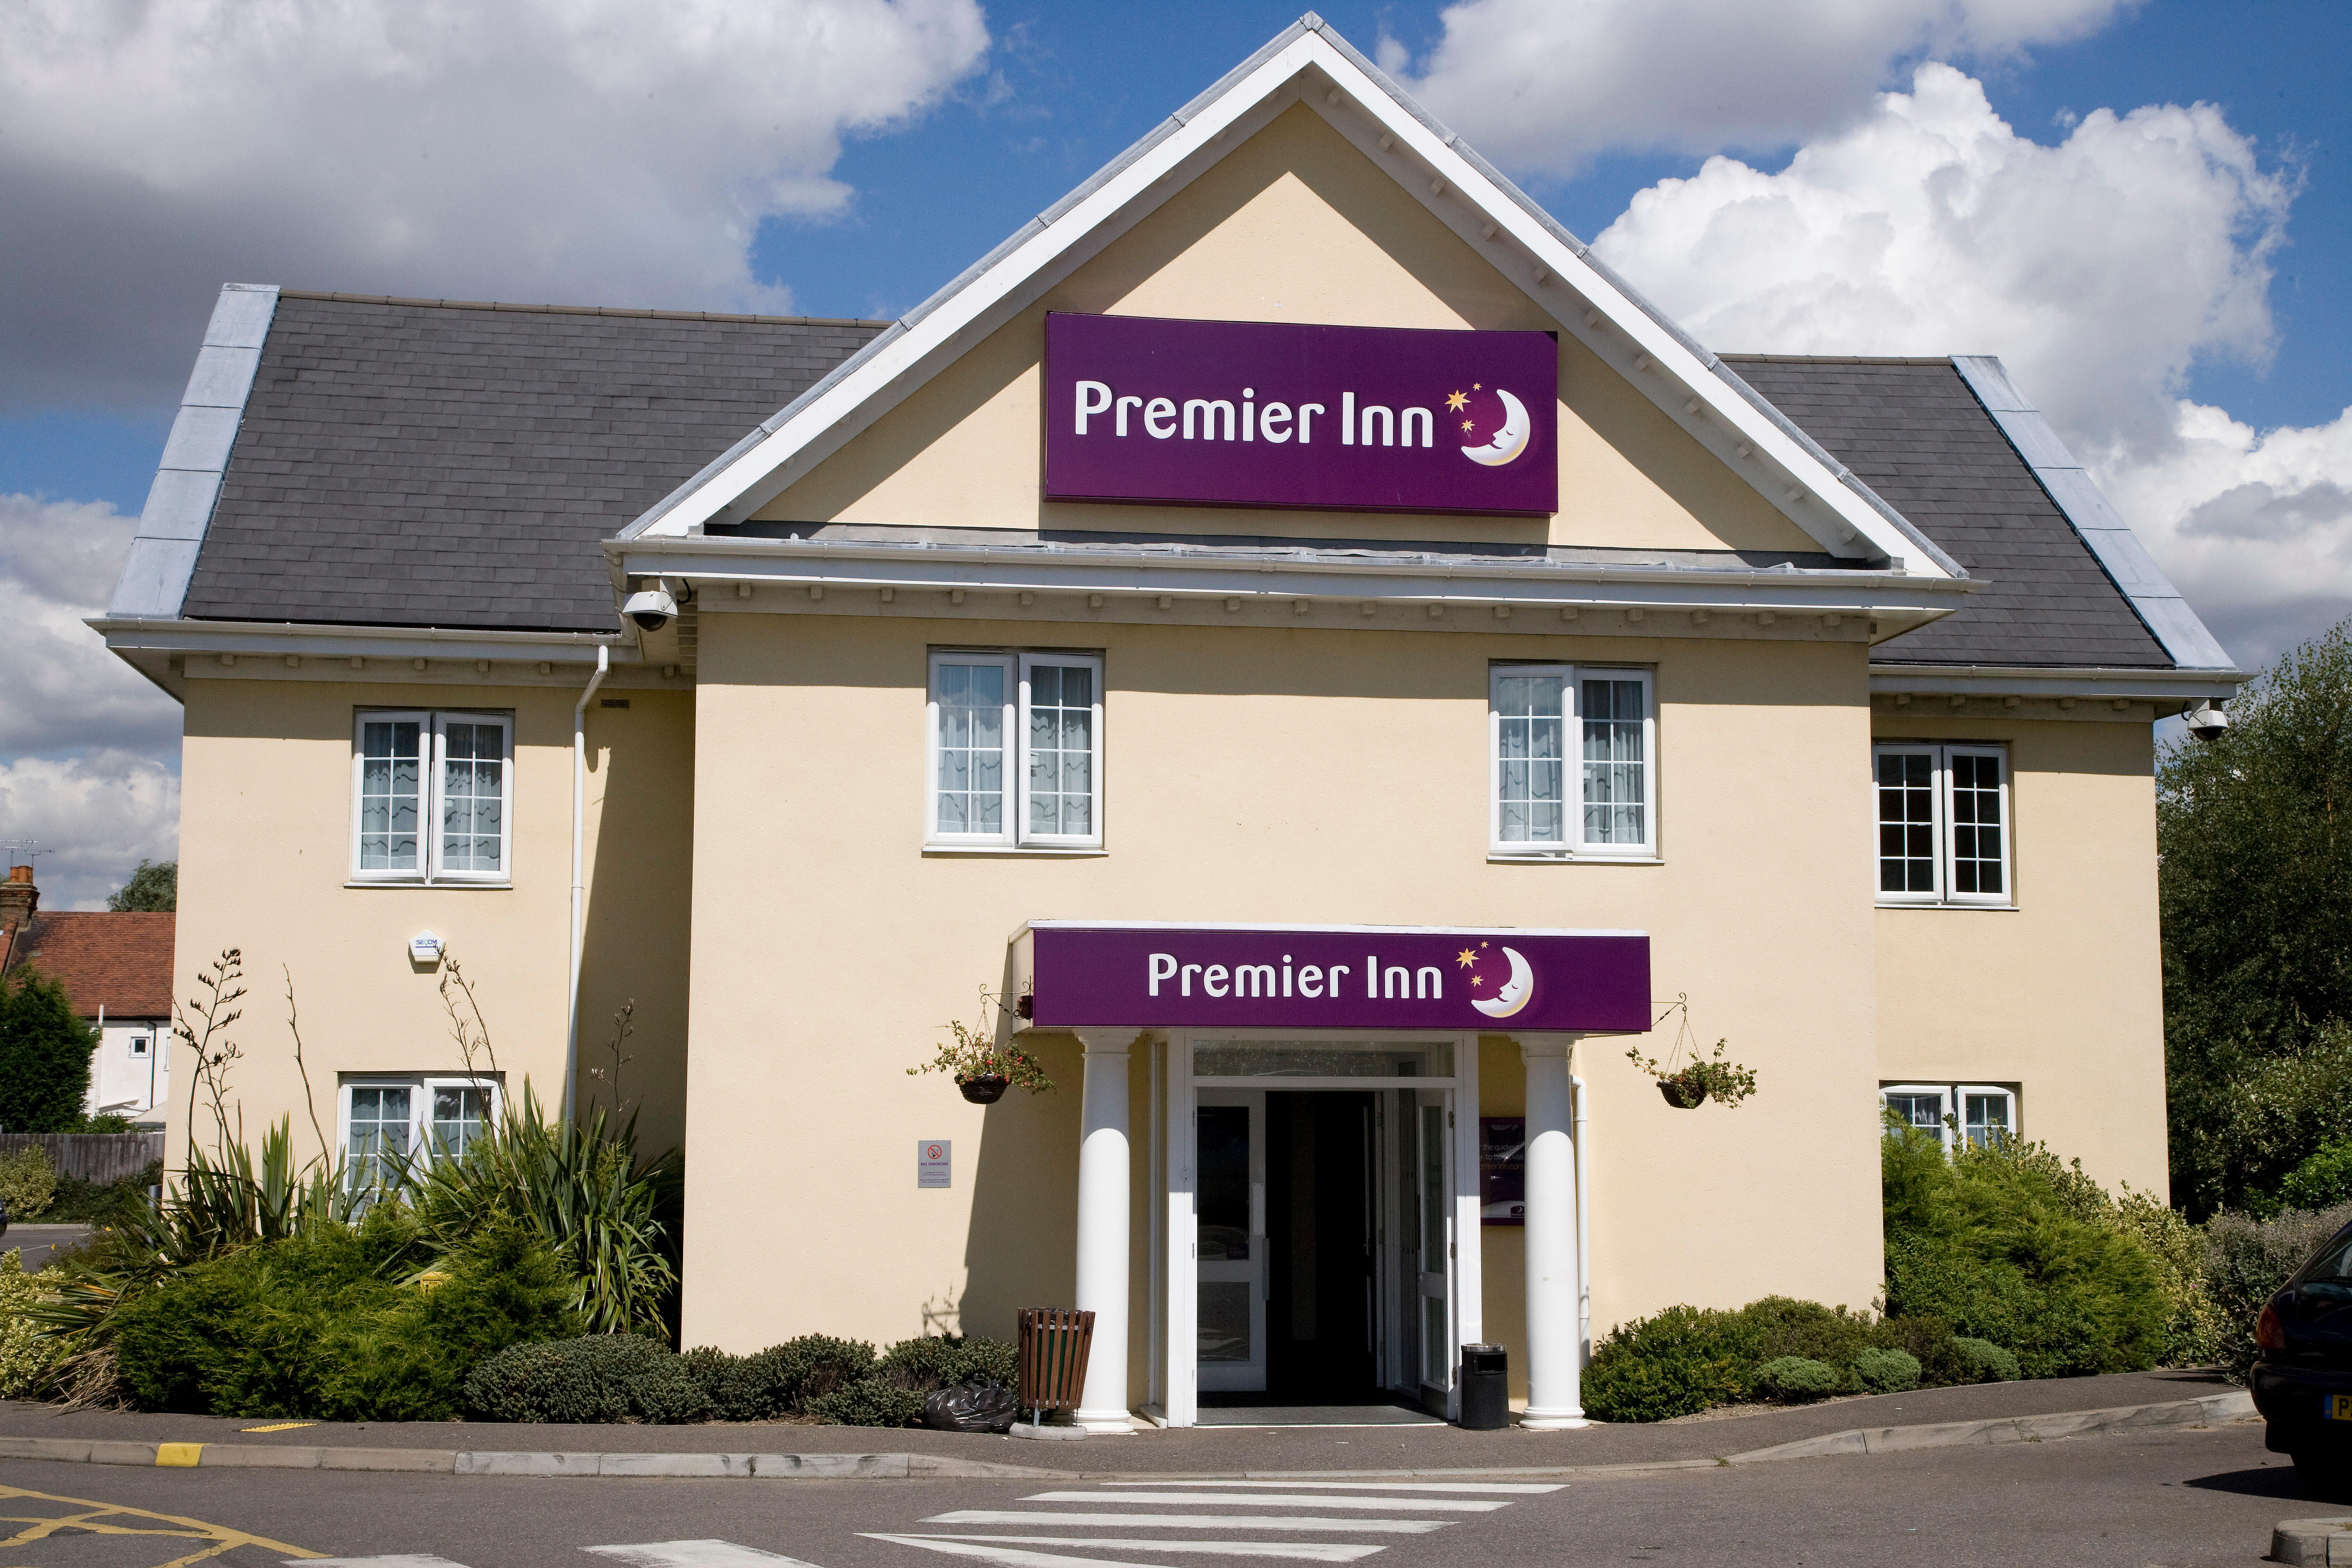 Premier Inn Southend-On-Sea (Thorpe Bay) hotel Premier Inn Southend-On-Sea (Thorpe Bay) hotel Southend-on-sea 03333 219011